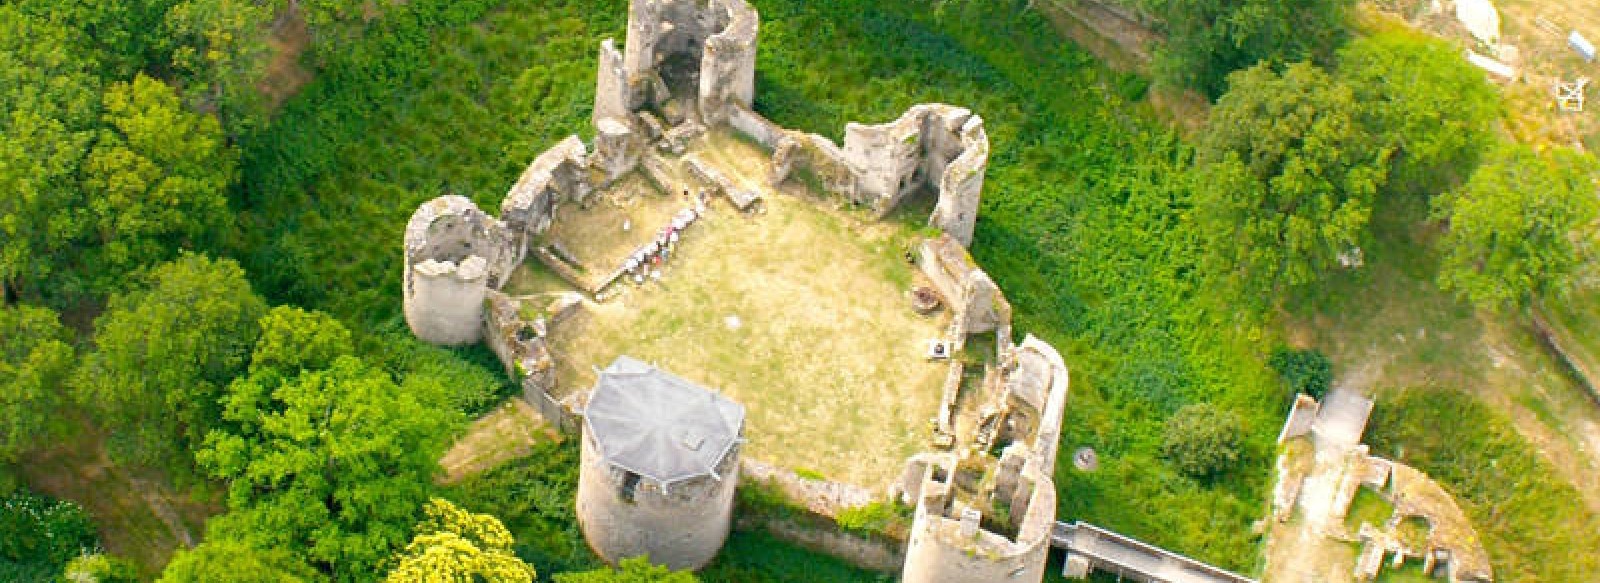 Chateau de Ranrouet